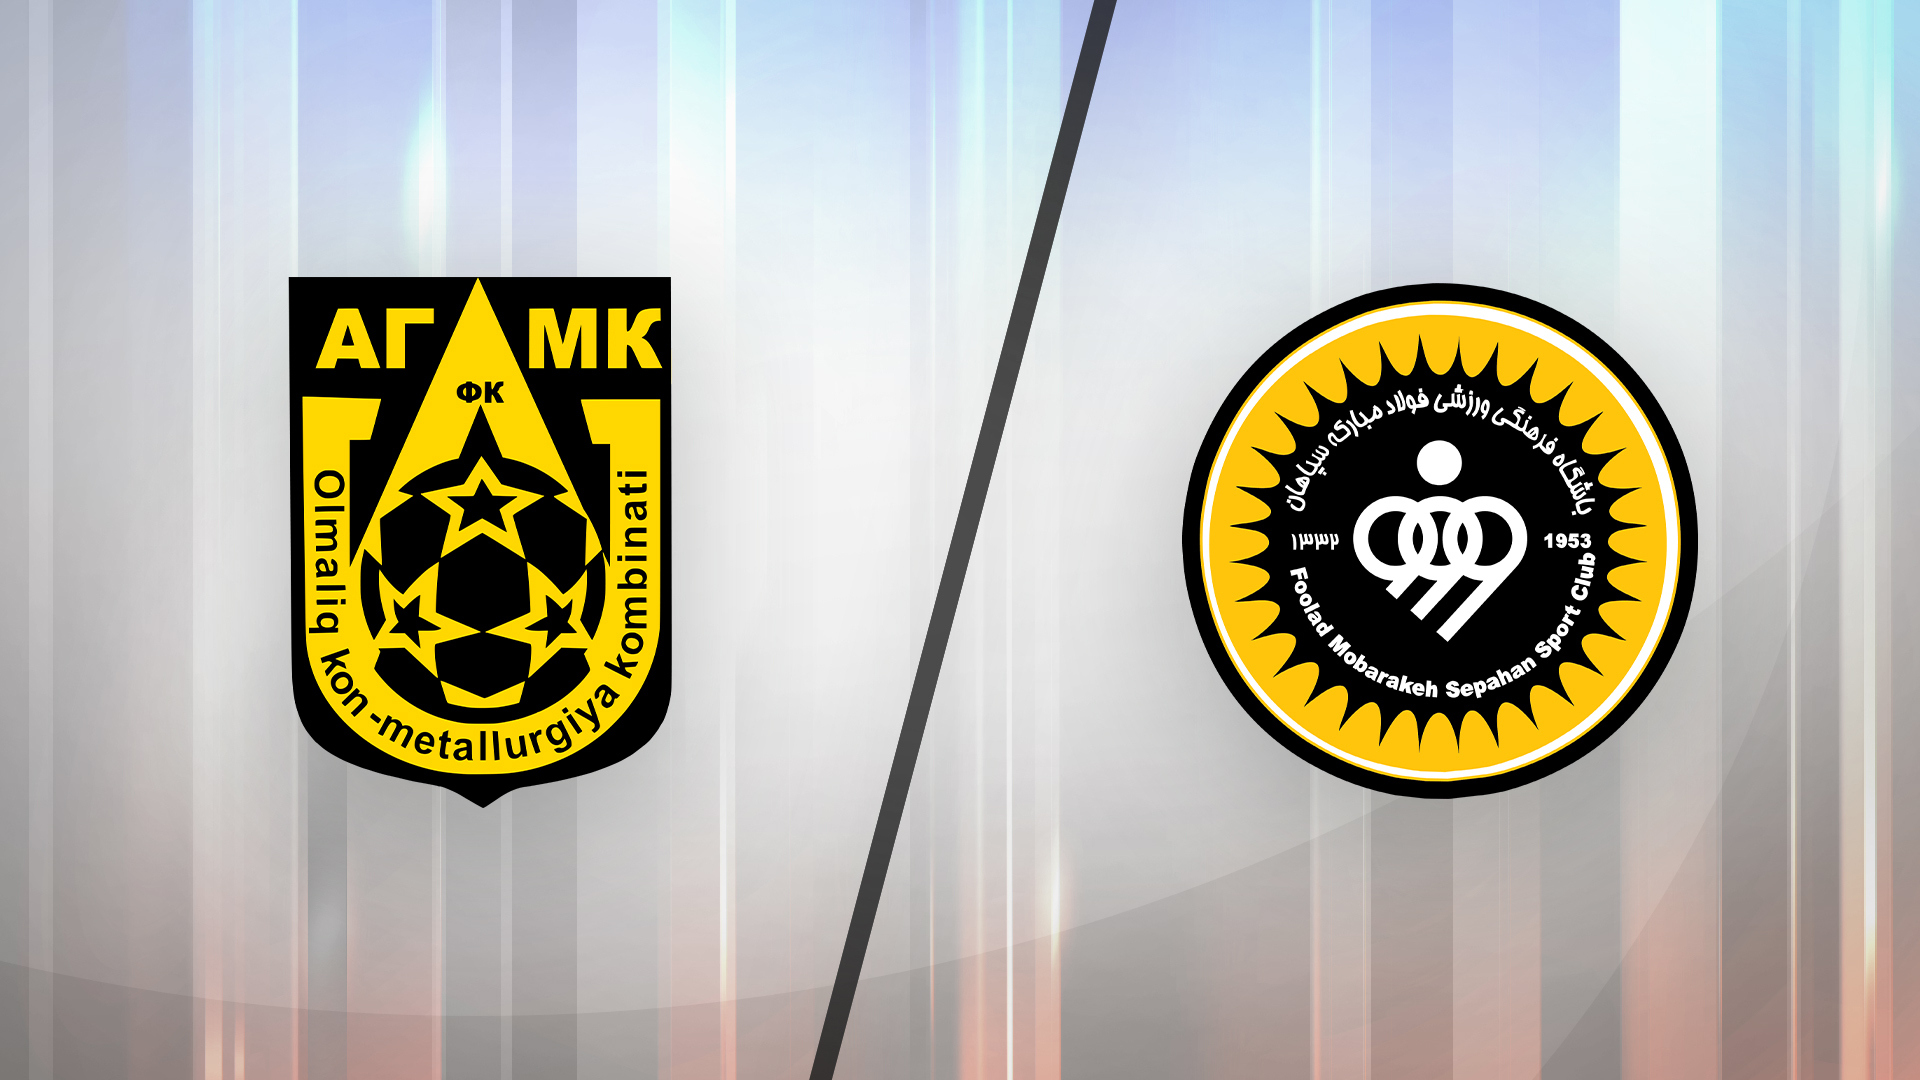 LIVE : Sepahan vs FC OKMK AGMK Olmaliq  Sepaxon - AGMK - سيباهان vs إف  سي أولمالك 